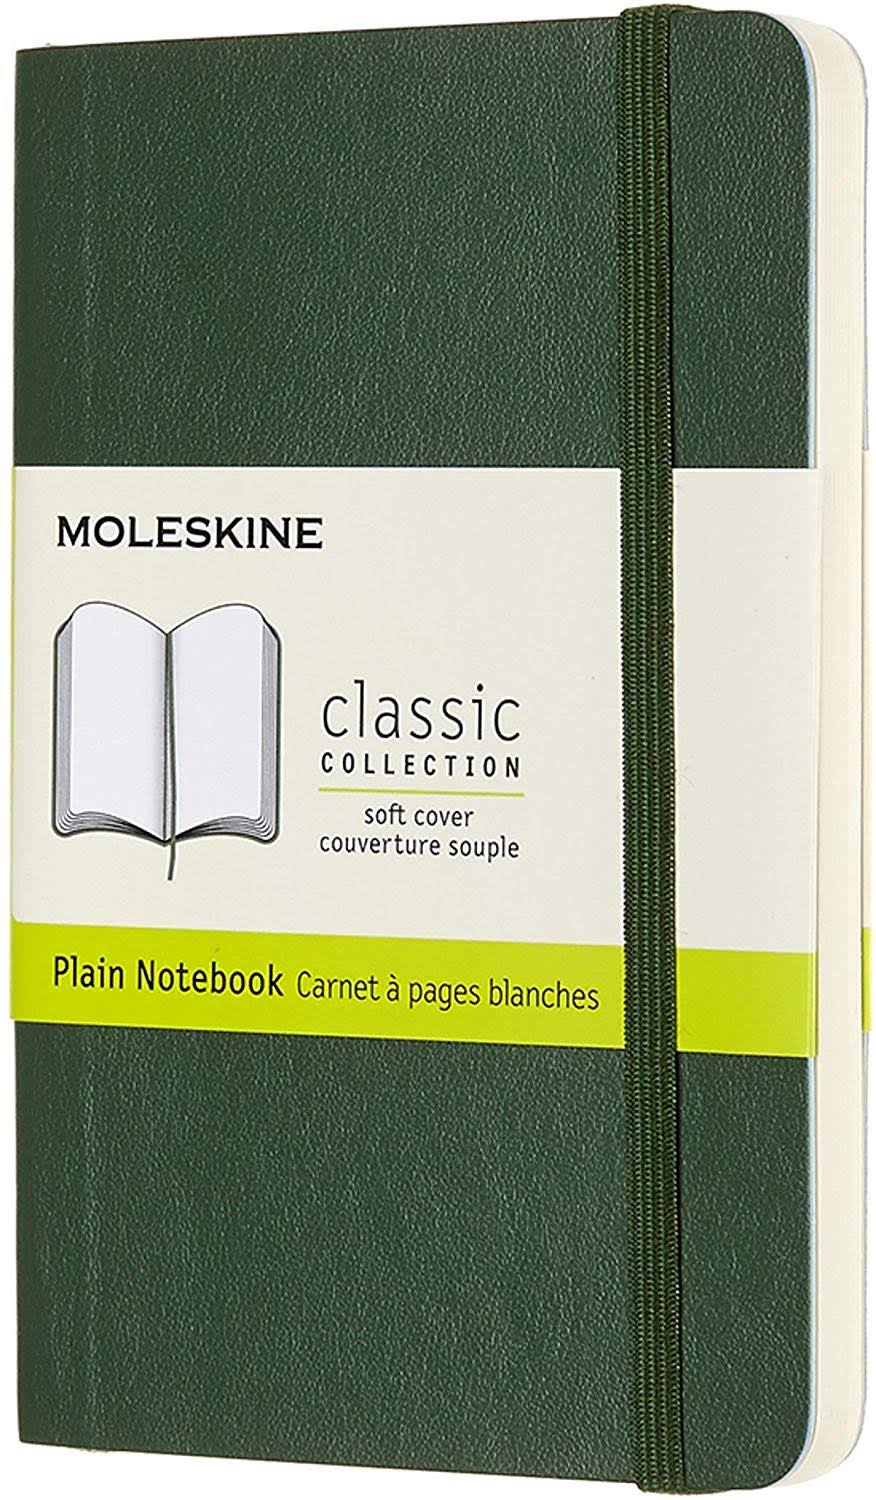 Moleskine Classic Soft Cover Pocket Notebook - Plain - Myrtle Green